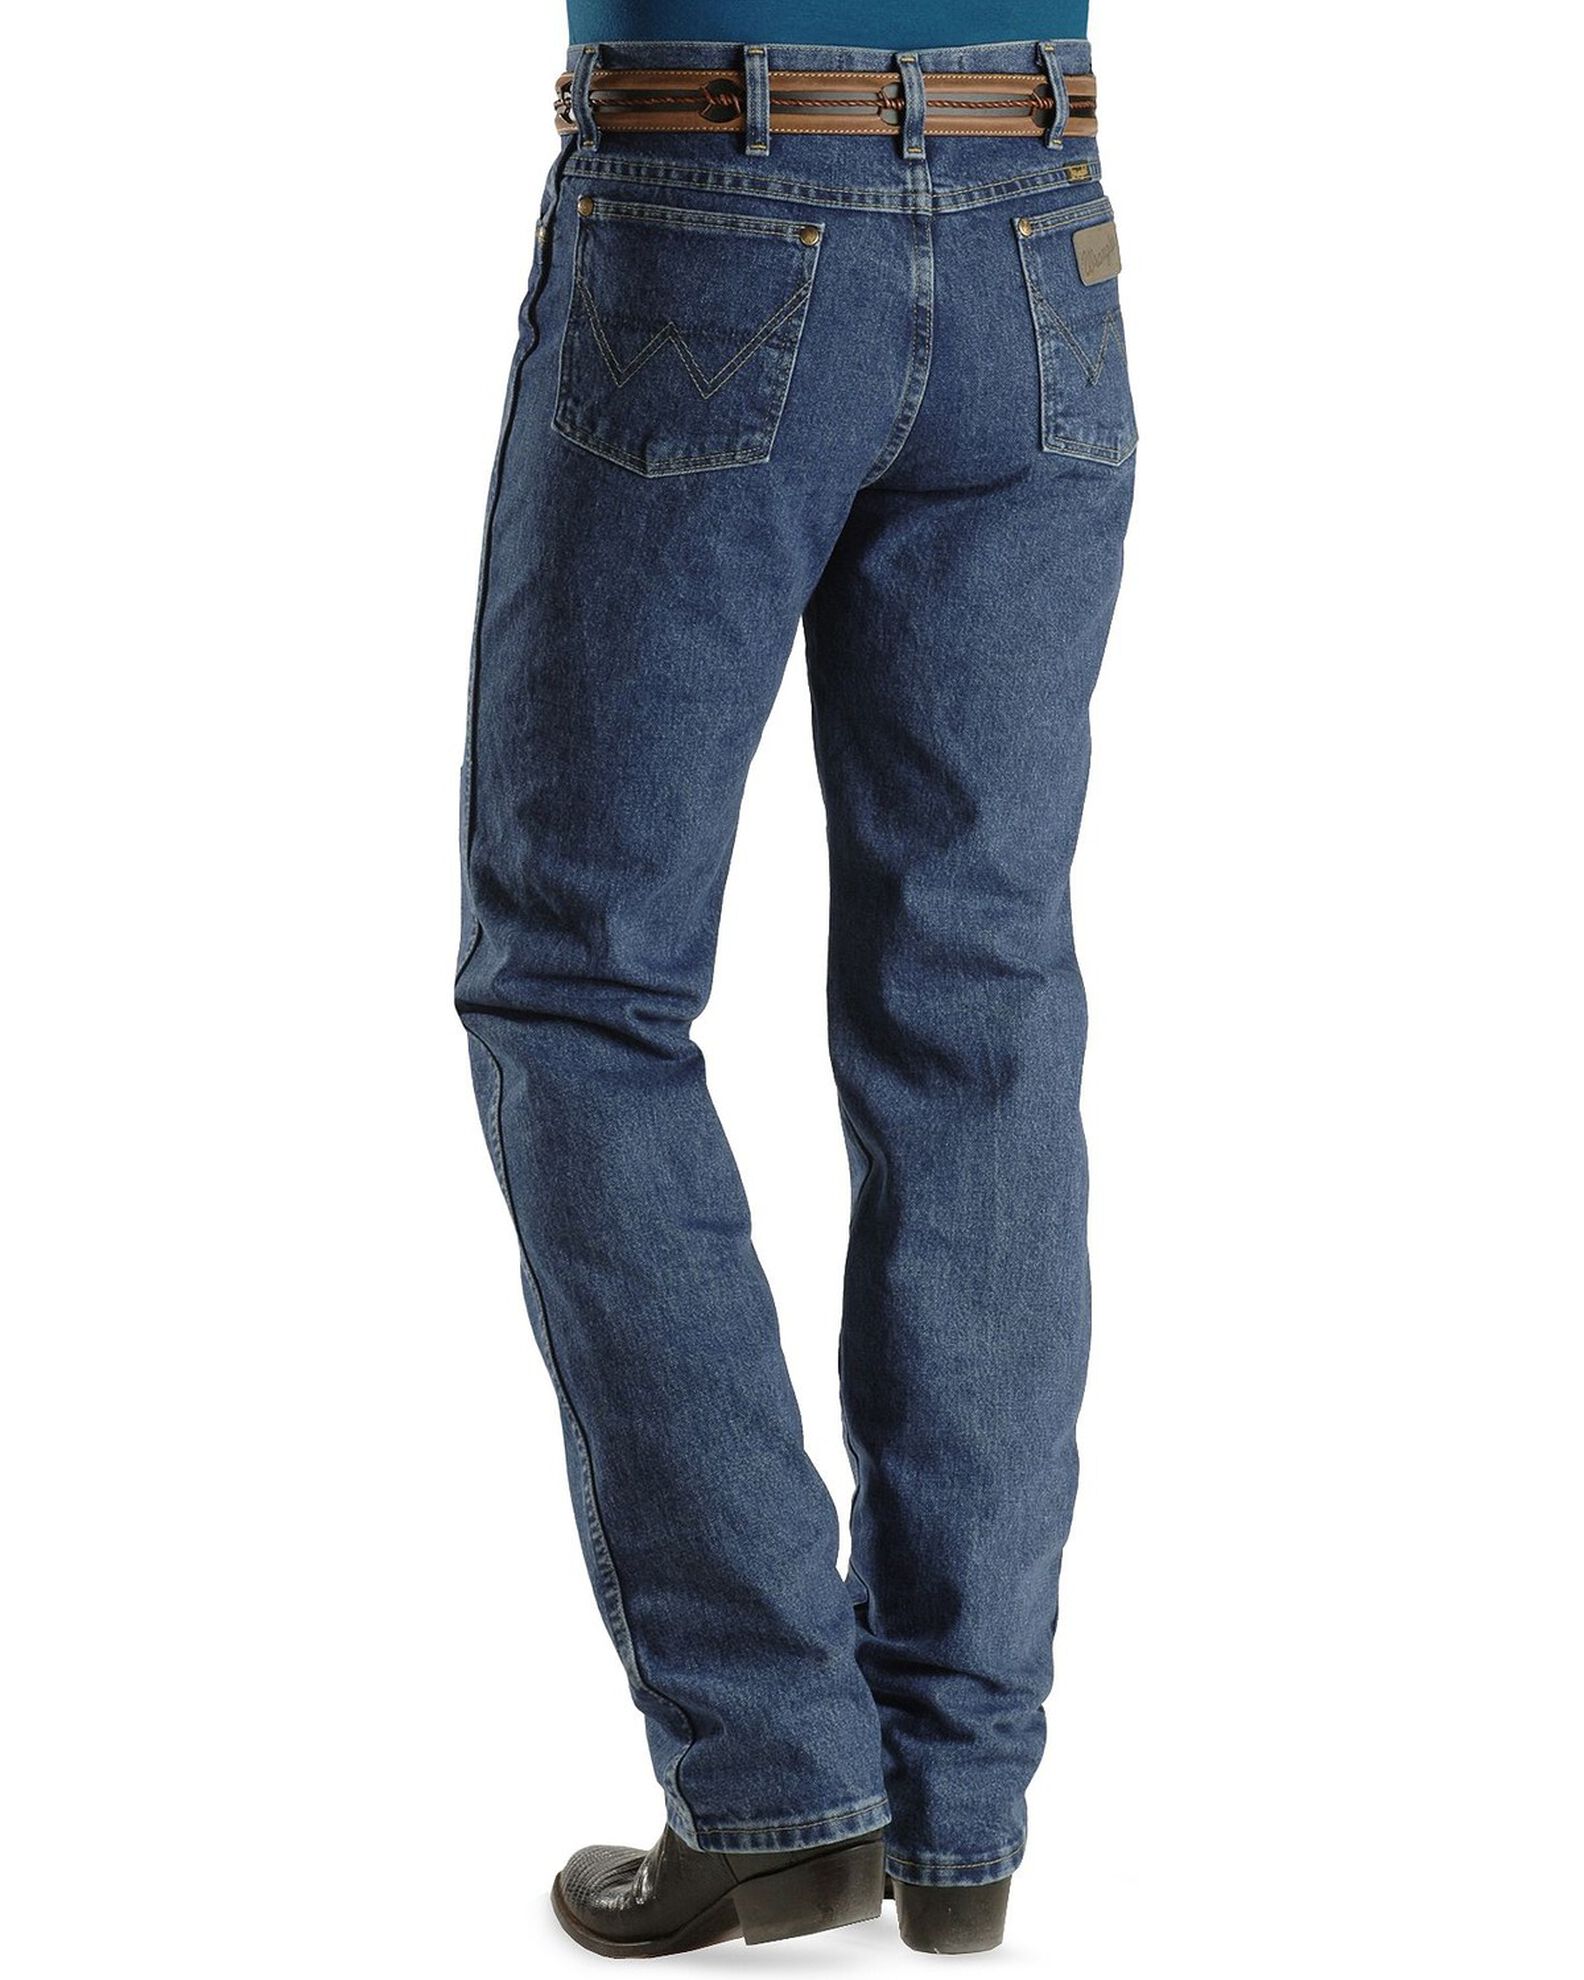 Product Name: Wrangler Men's George Strait 936 Cowboy Cut Slim Jeans